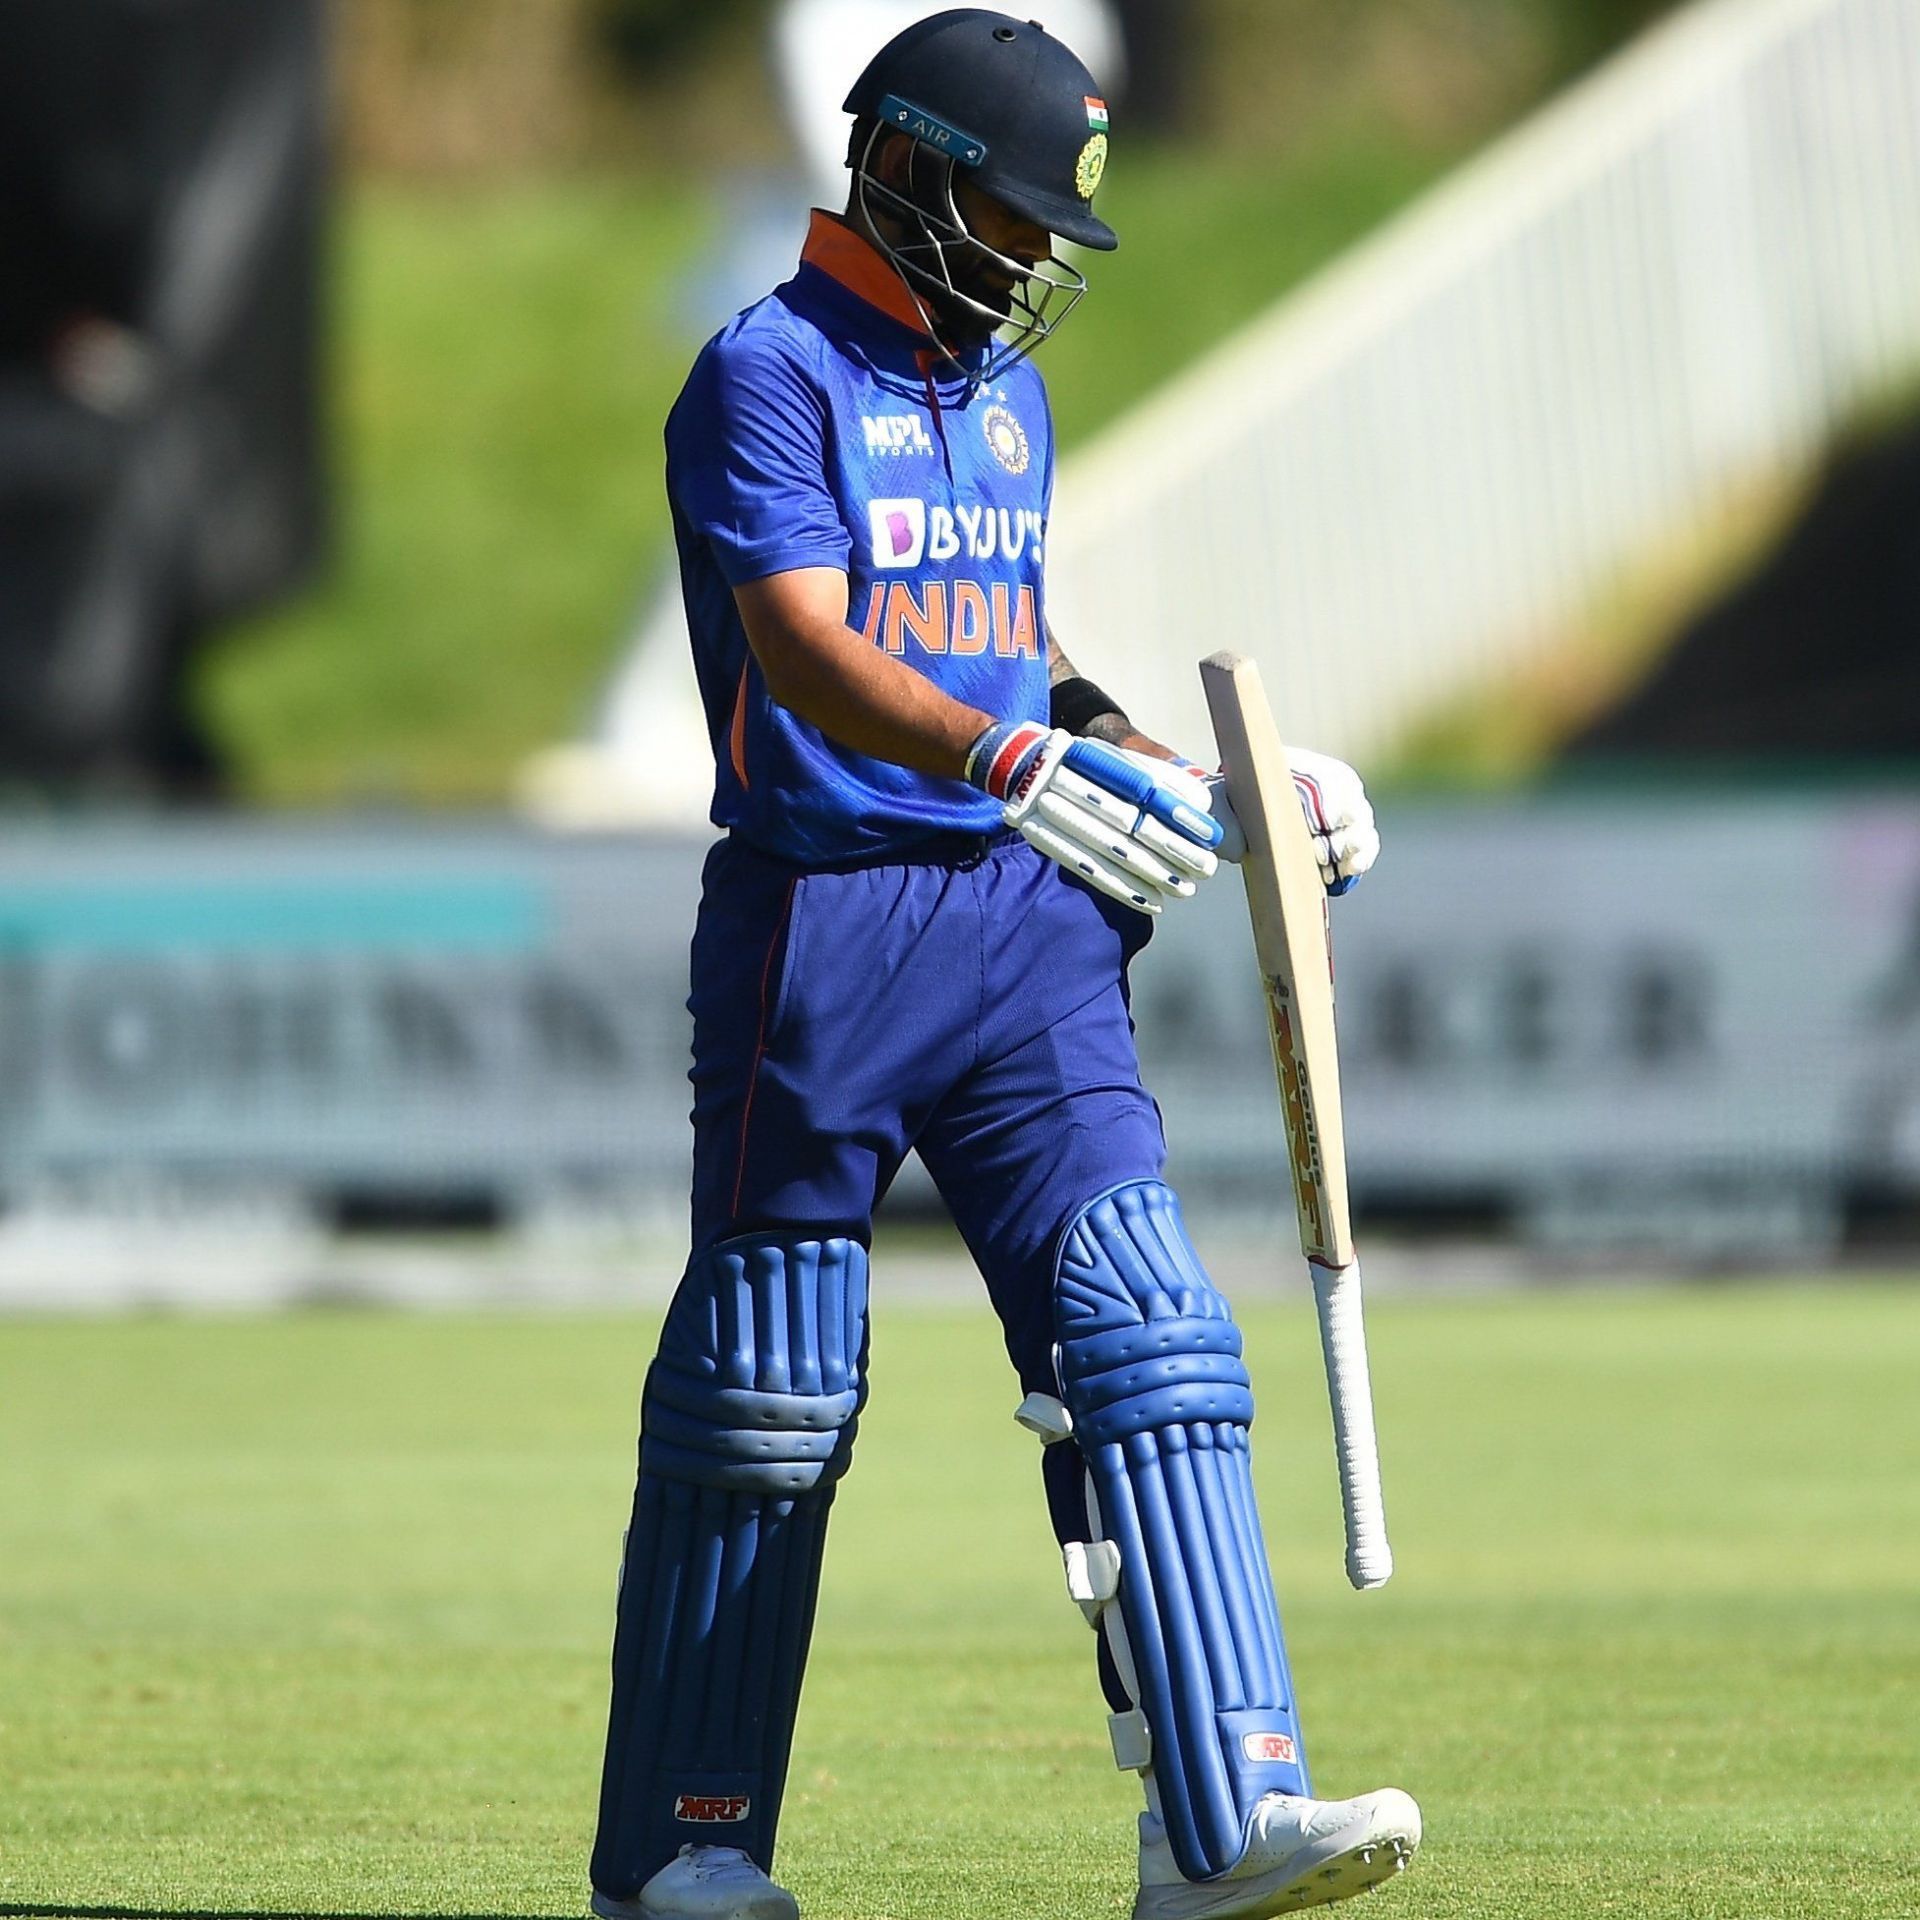 Virat Kohli after his dismissal in the second ODI vs South Africa.